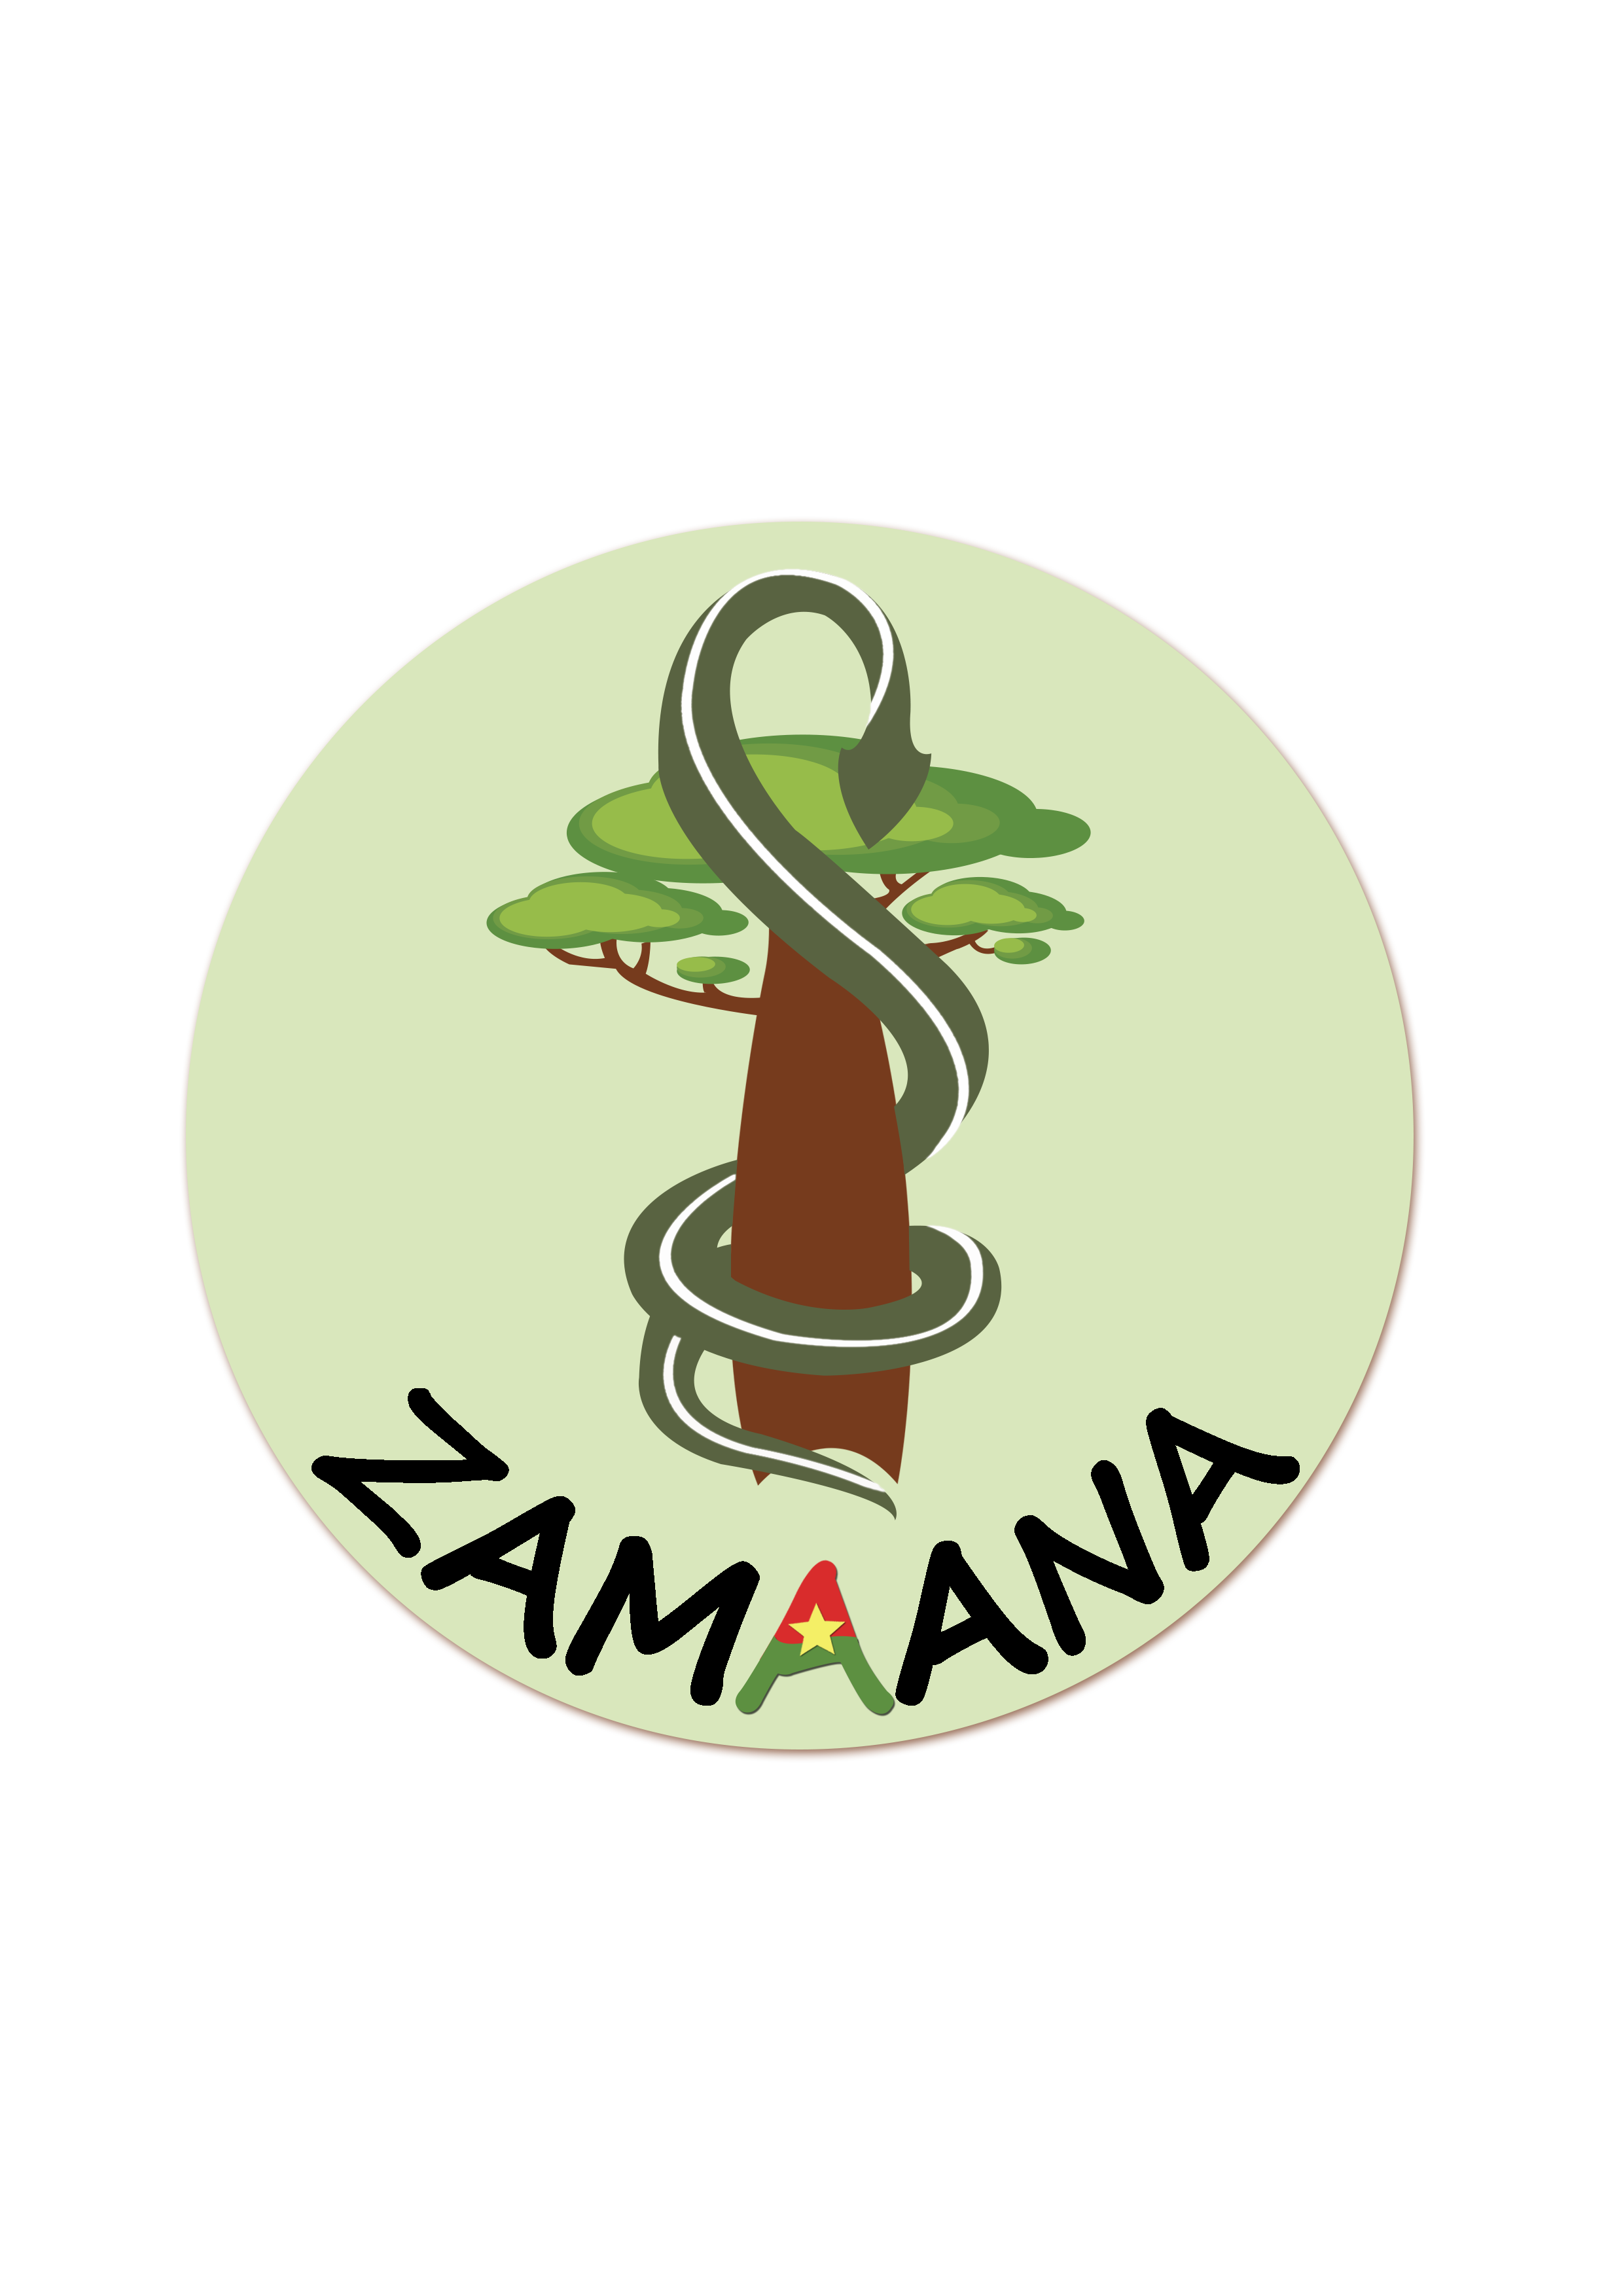 Association Zamaana "Humanité"